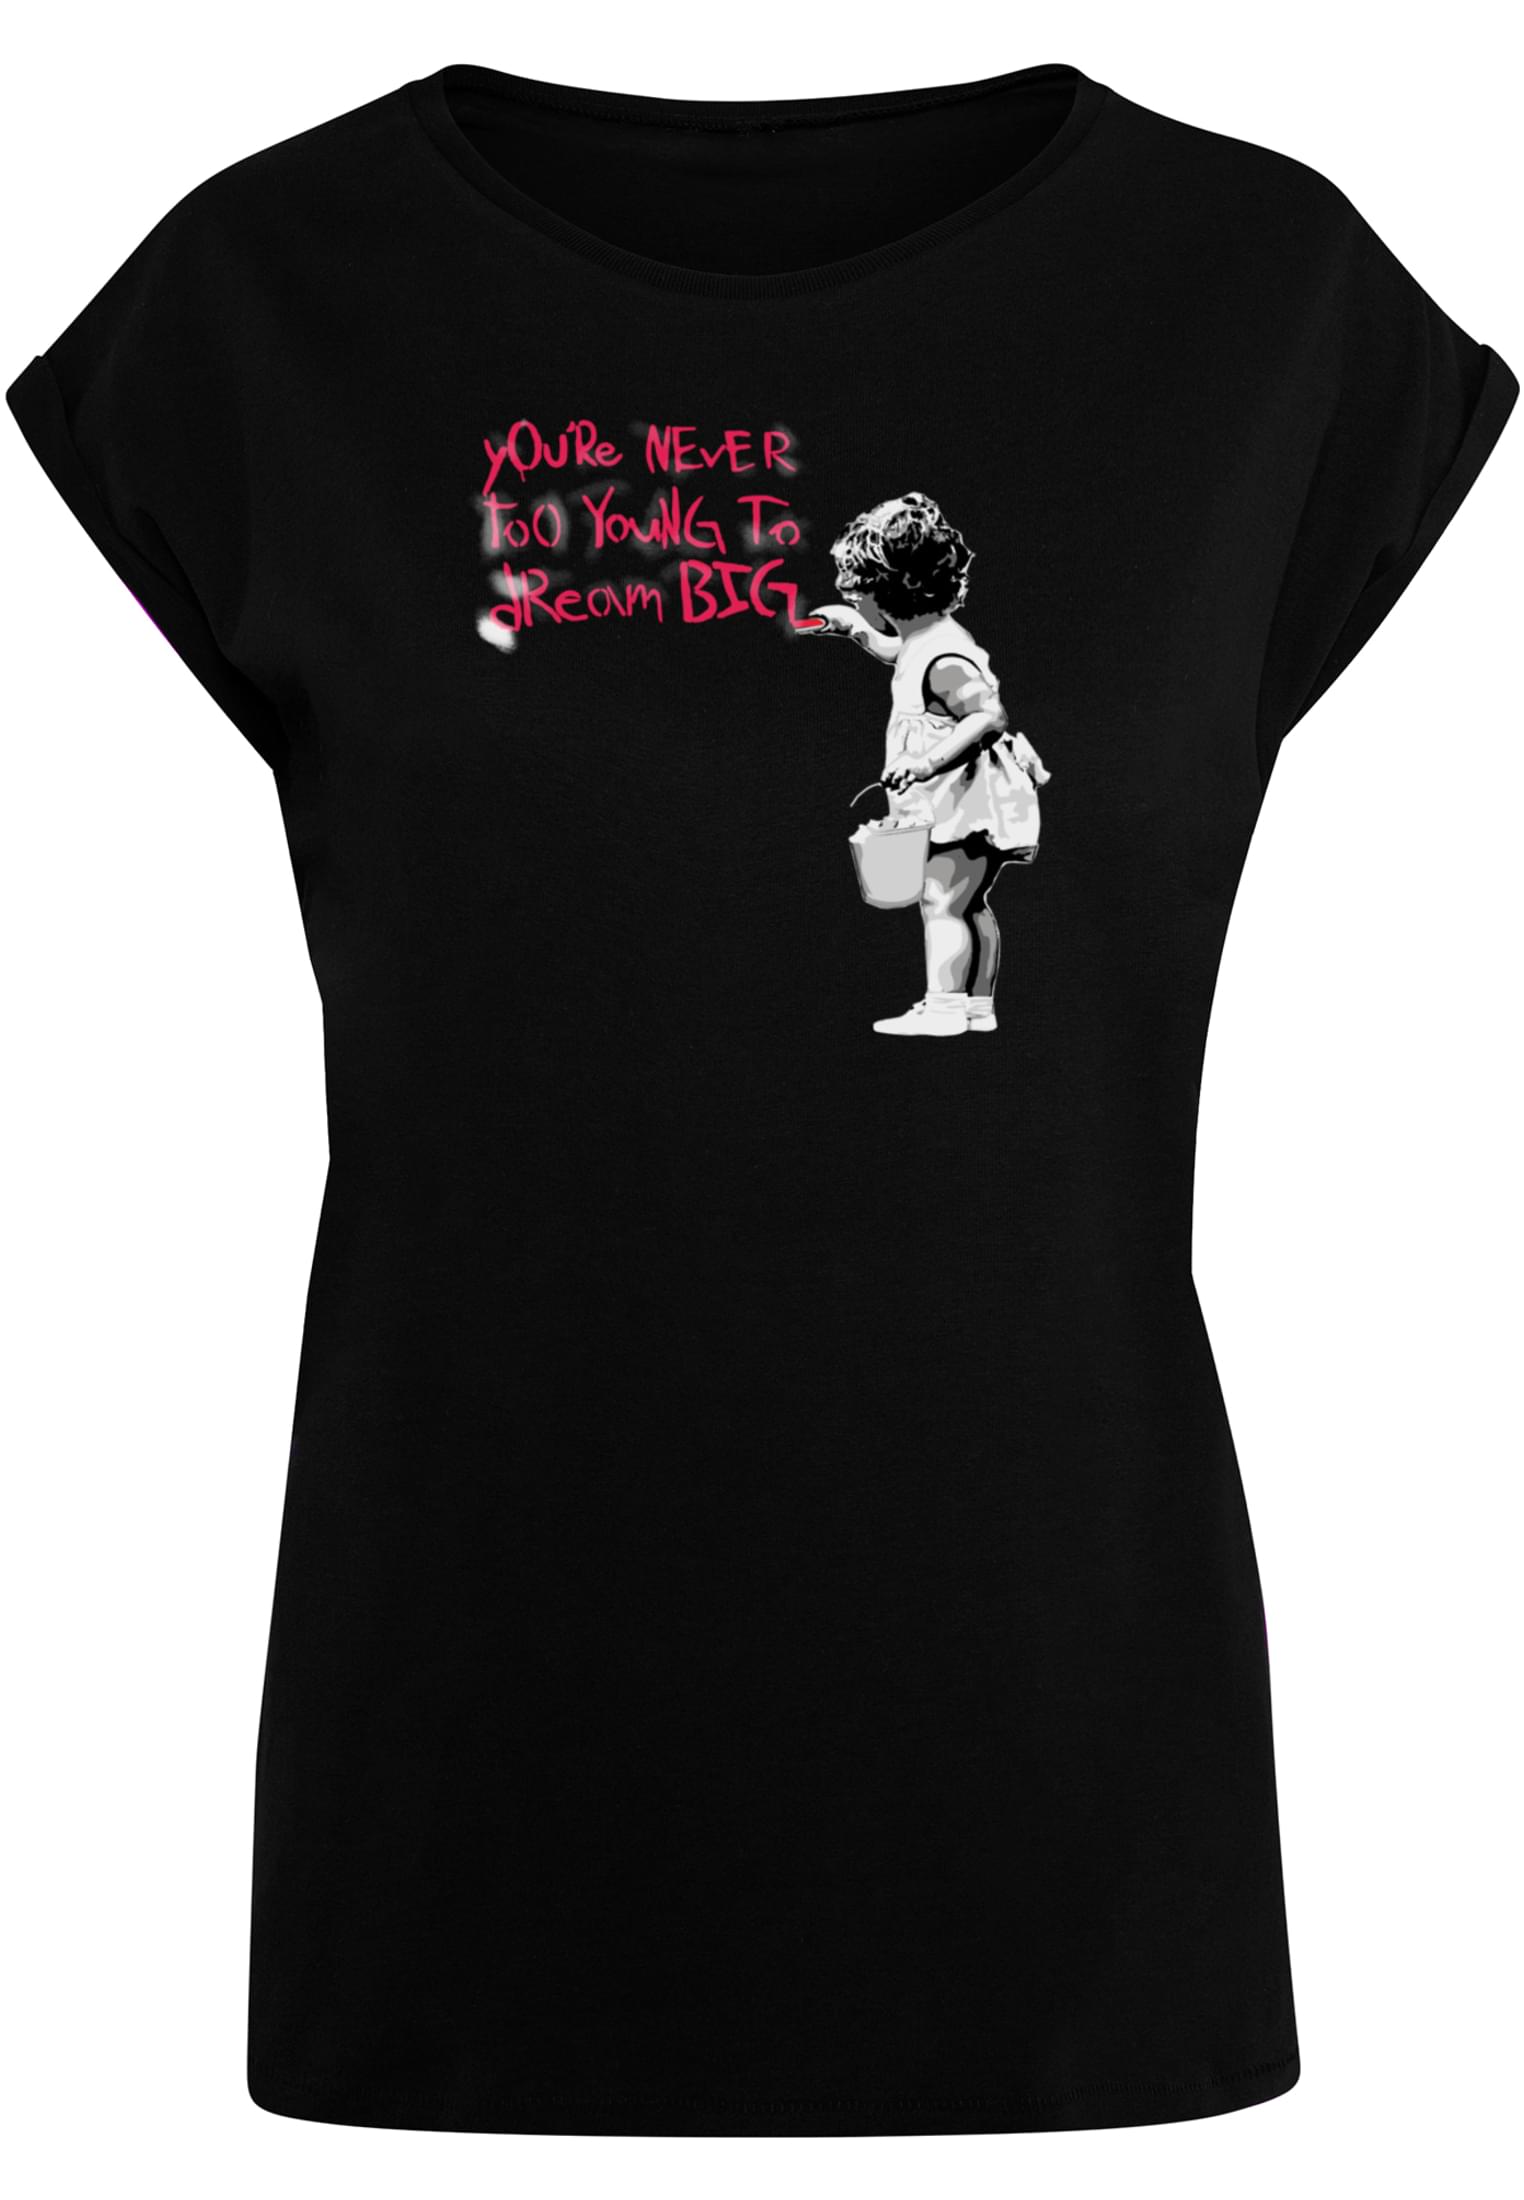 Women's T-shirt Dream Big - black